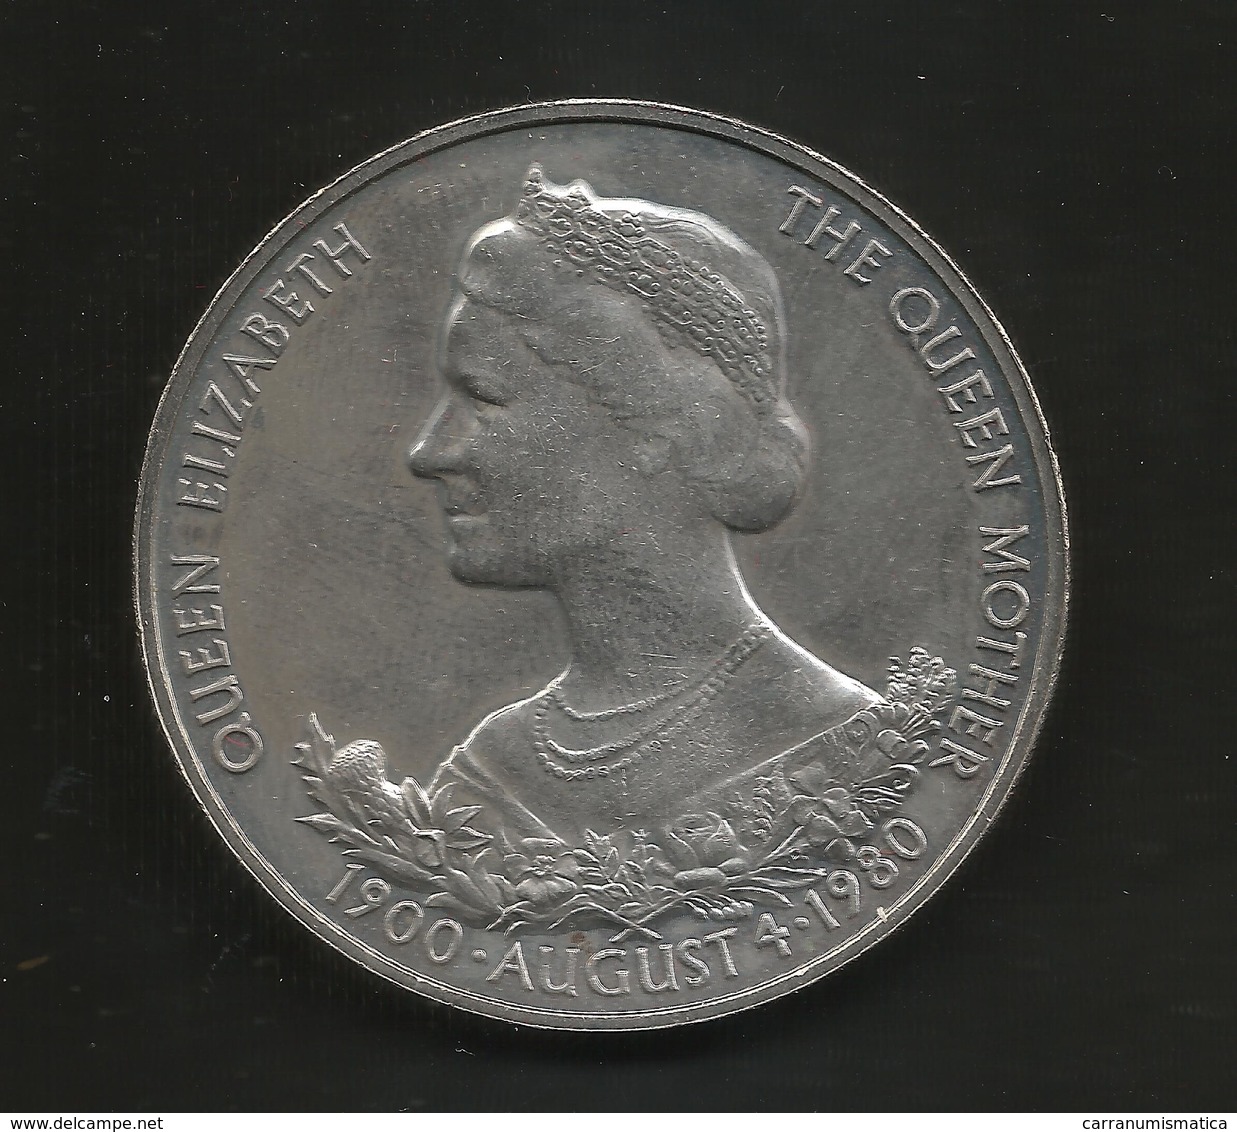 GUERNSEY - 25 PENCE - Queen Mother 80th Birthday ( 1900 - 1980 ) / Queen Elizabeth II - Guernesey